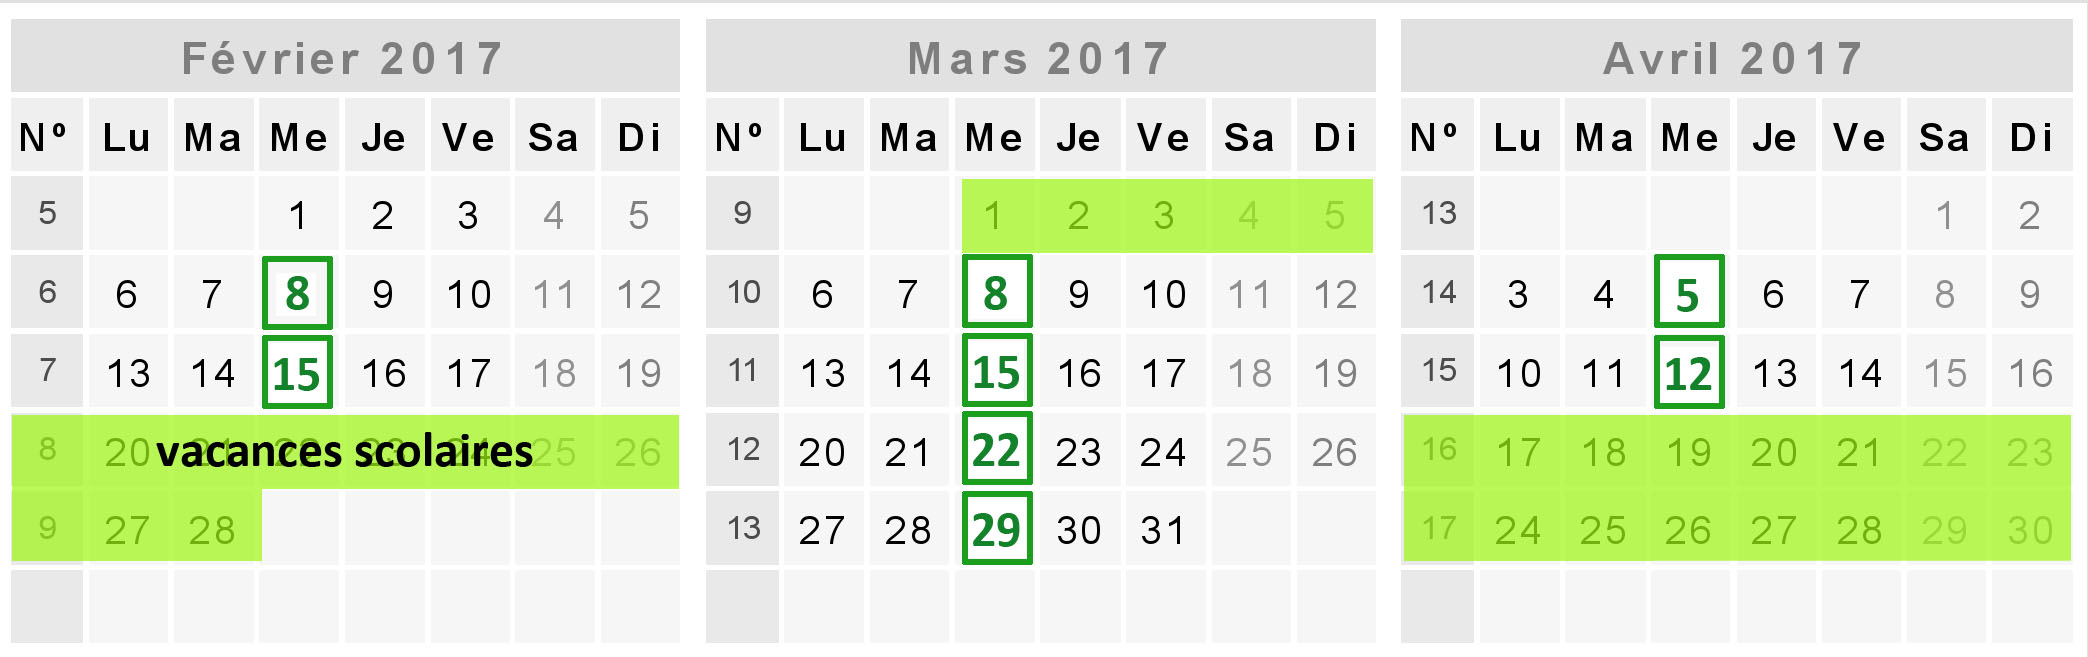 pleine conscience enfant - calendrier fev 2017 - avril 2017